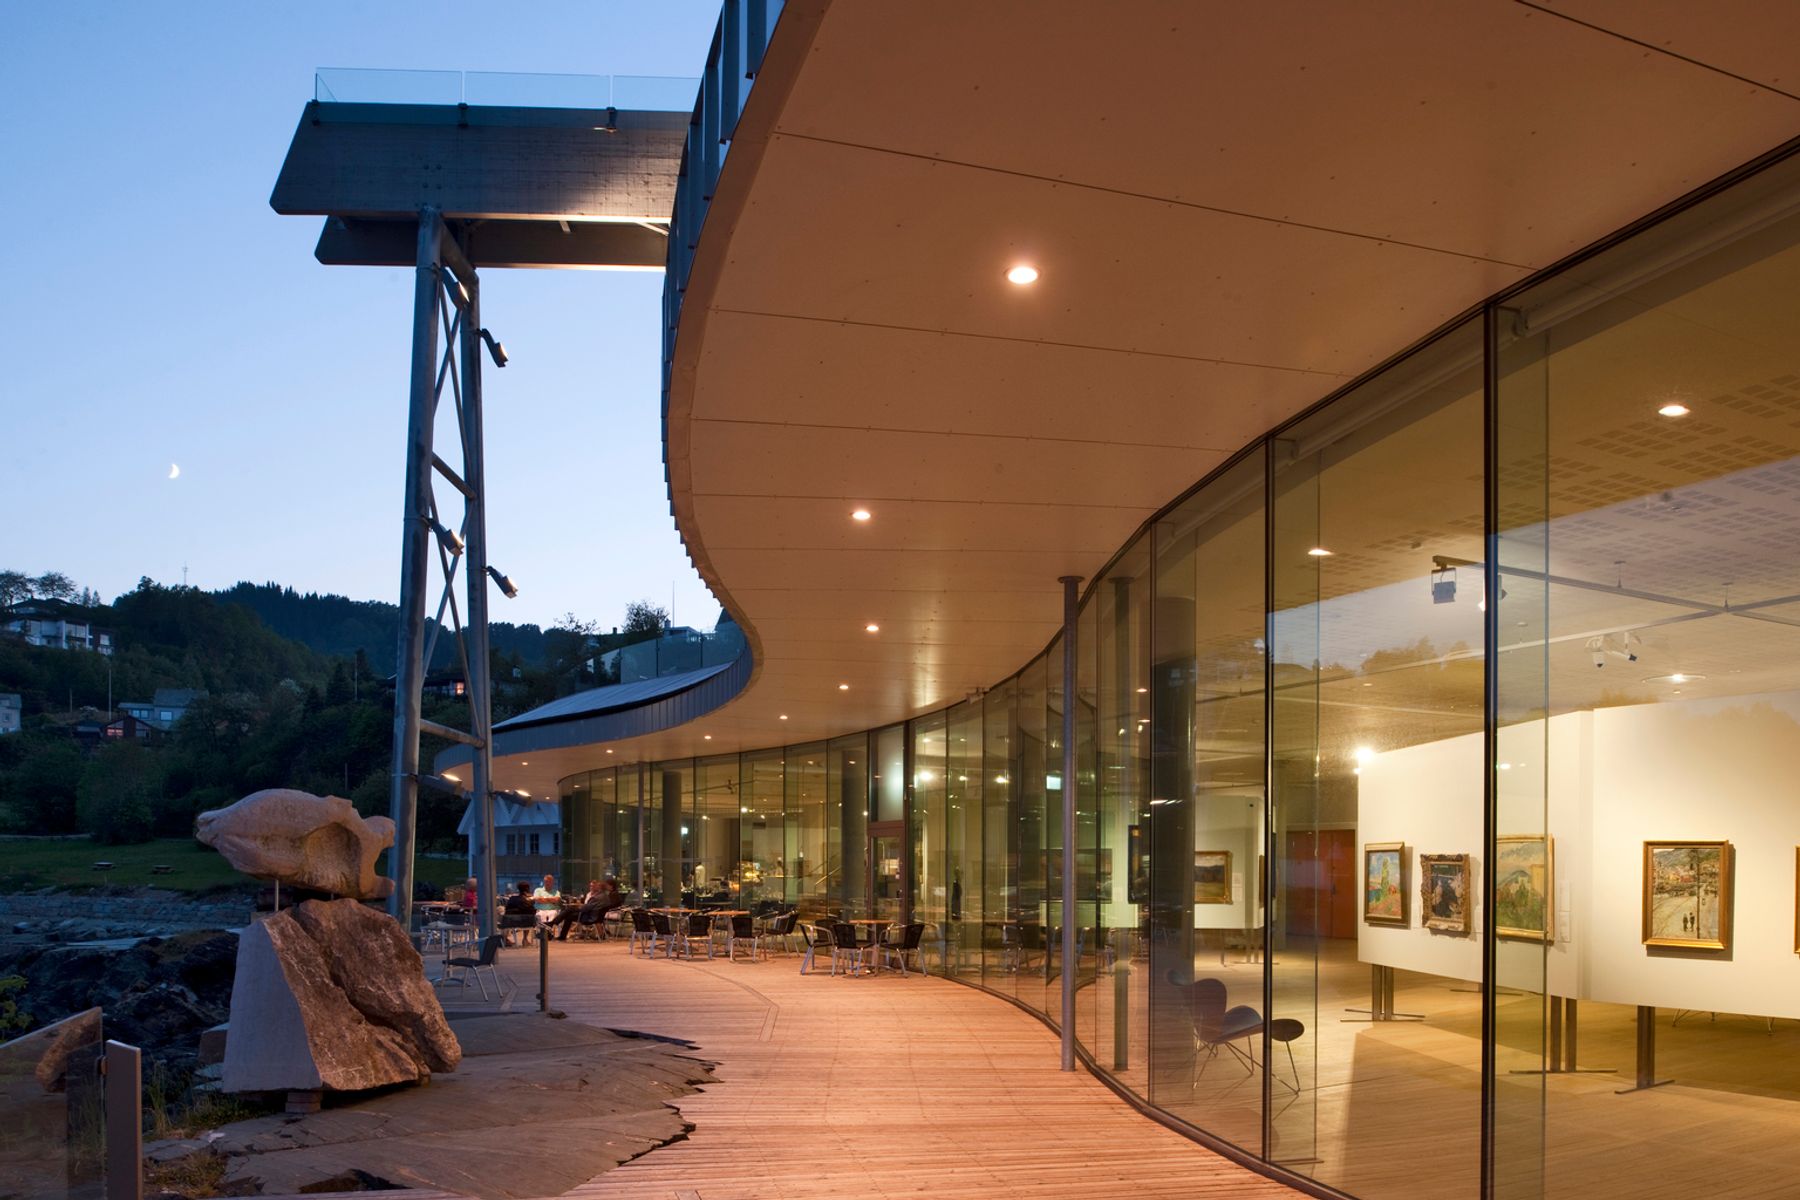 Oseana Art & Culture Center, Os. Architettura: Grieg Arkitekter, Bergen. Progettazione illuminotecnica: Multiconsult AS. Fotografia: Thomas Mayer, Neuss.